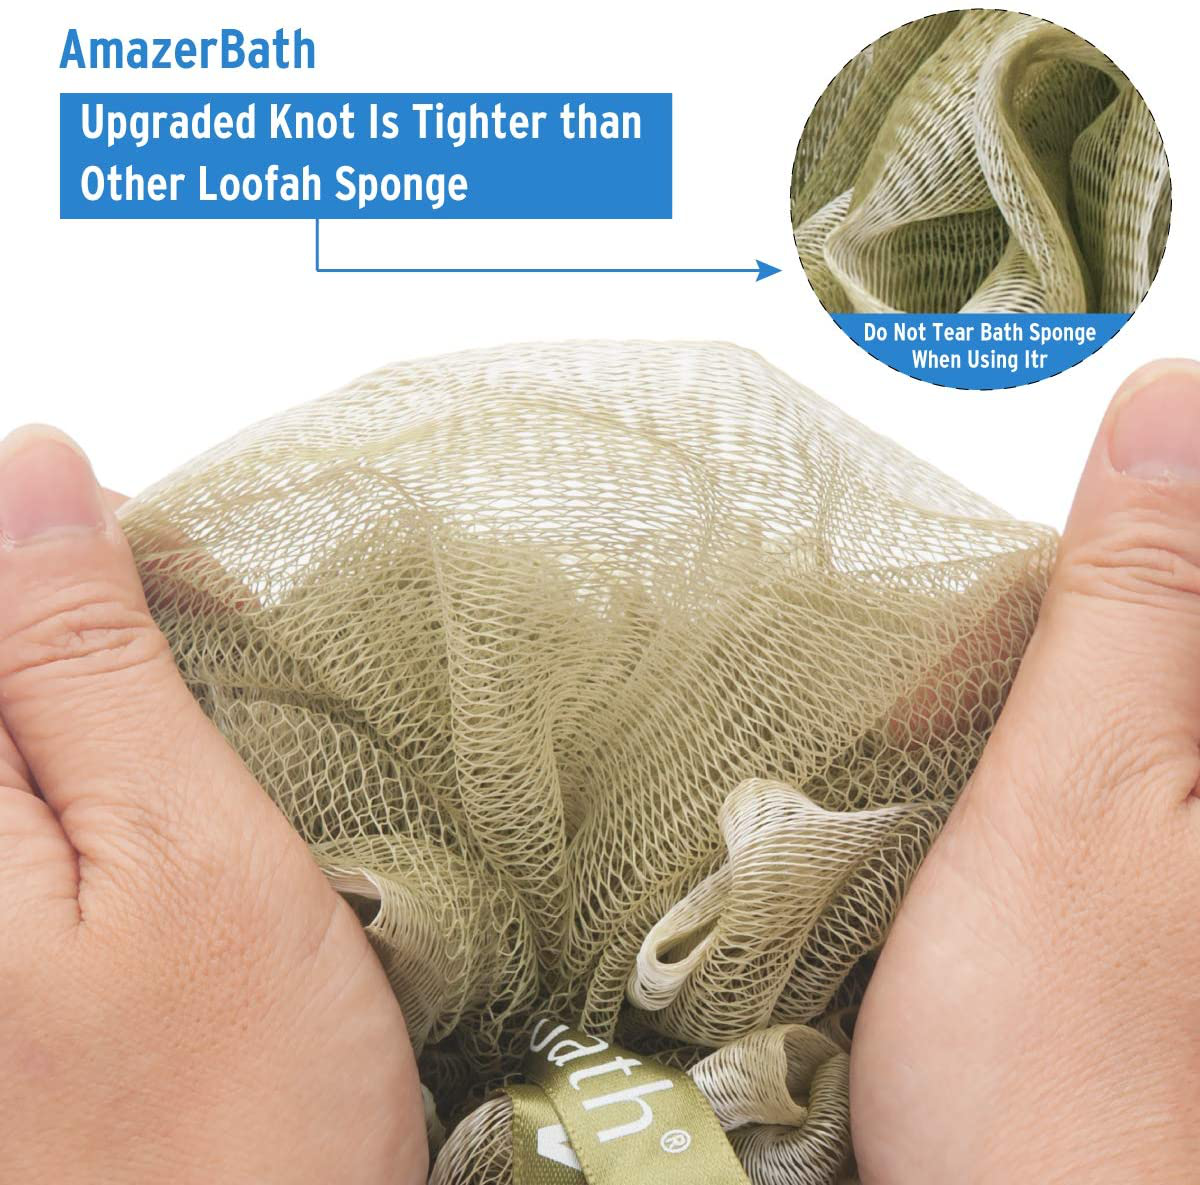 AmazerBath Shower Bath Sponge Shower Loofahs Balls Body Wash Bathroom Men Women- Set of 4